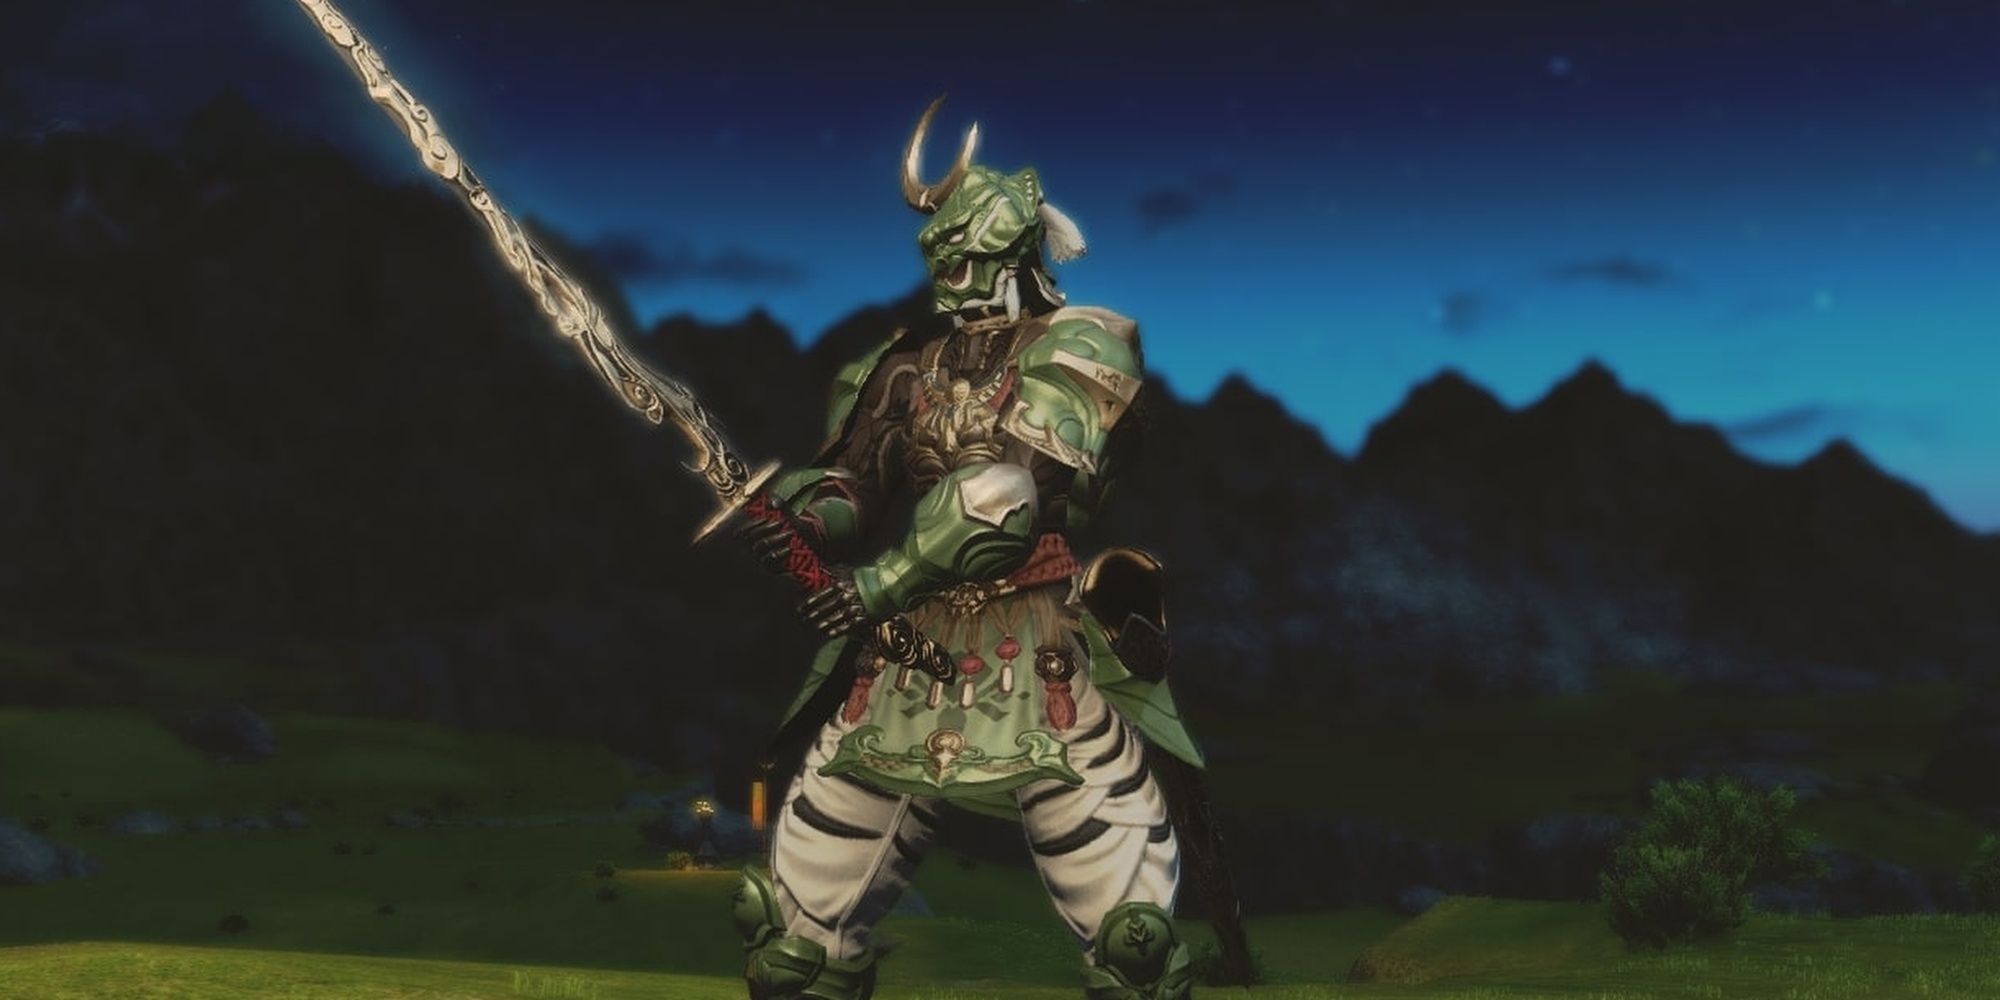 Final Fantasy 14 Samurai in Kojin Armor Posed Against a Mountain Range